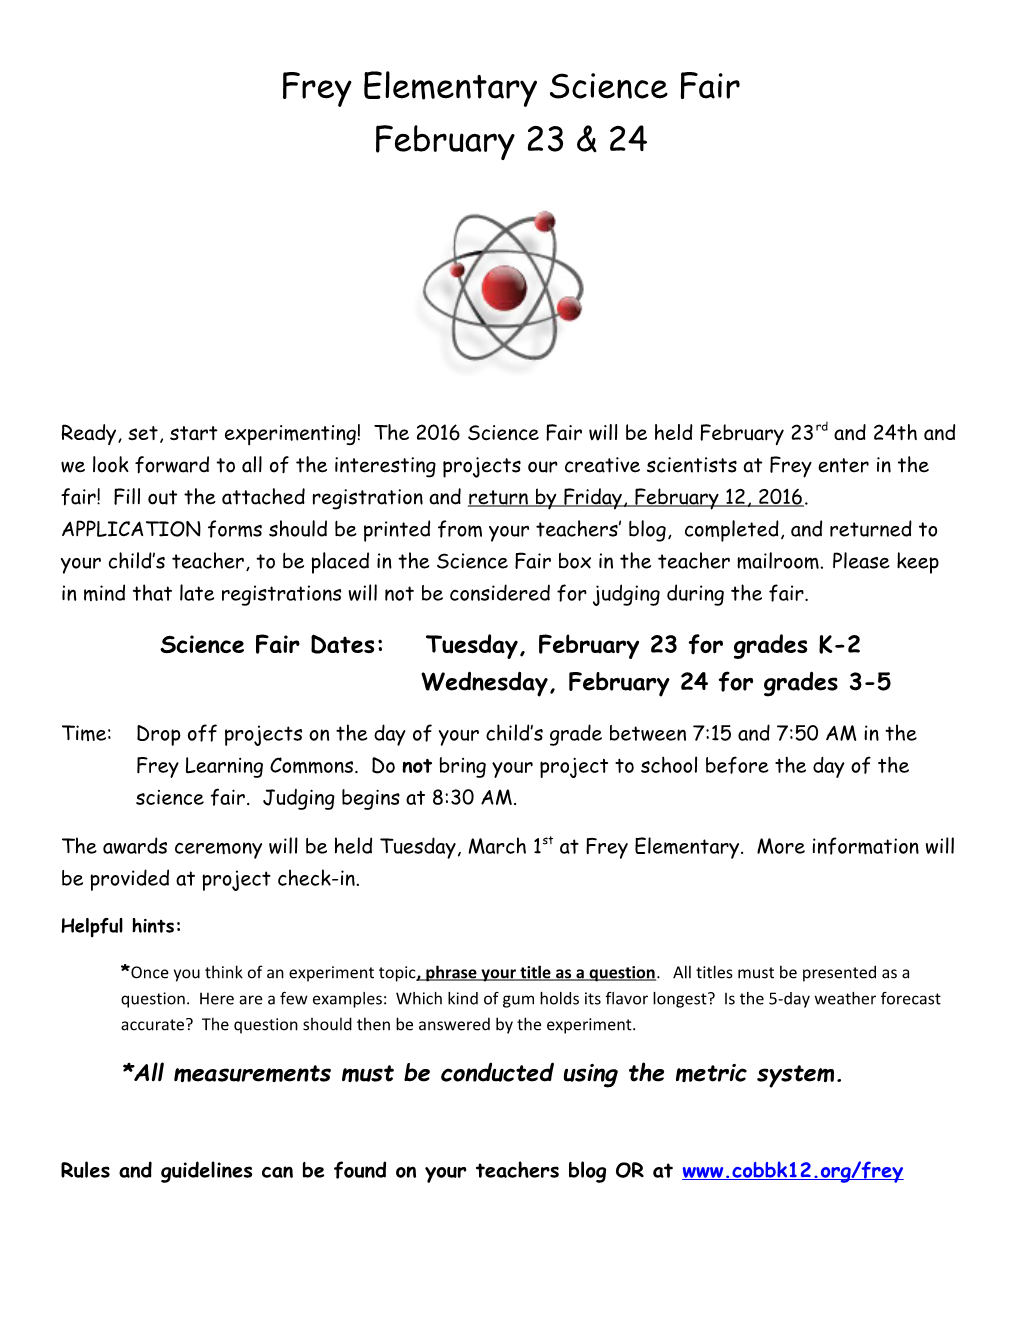 Frey Elementary Science Fair February 23 & 24